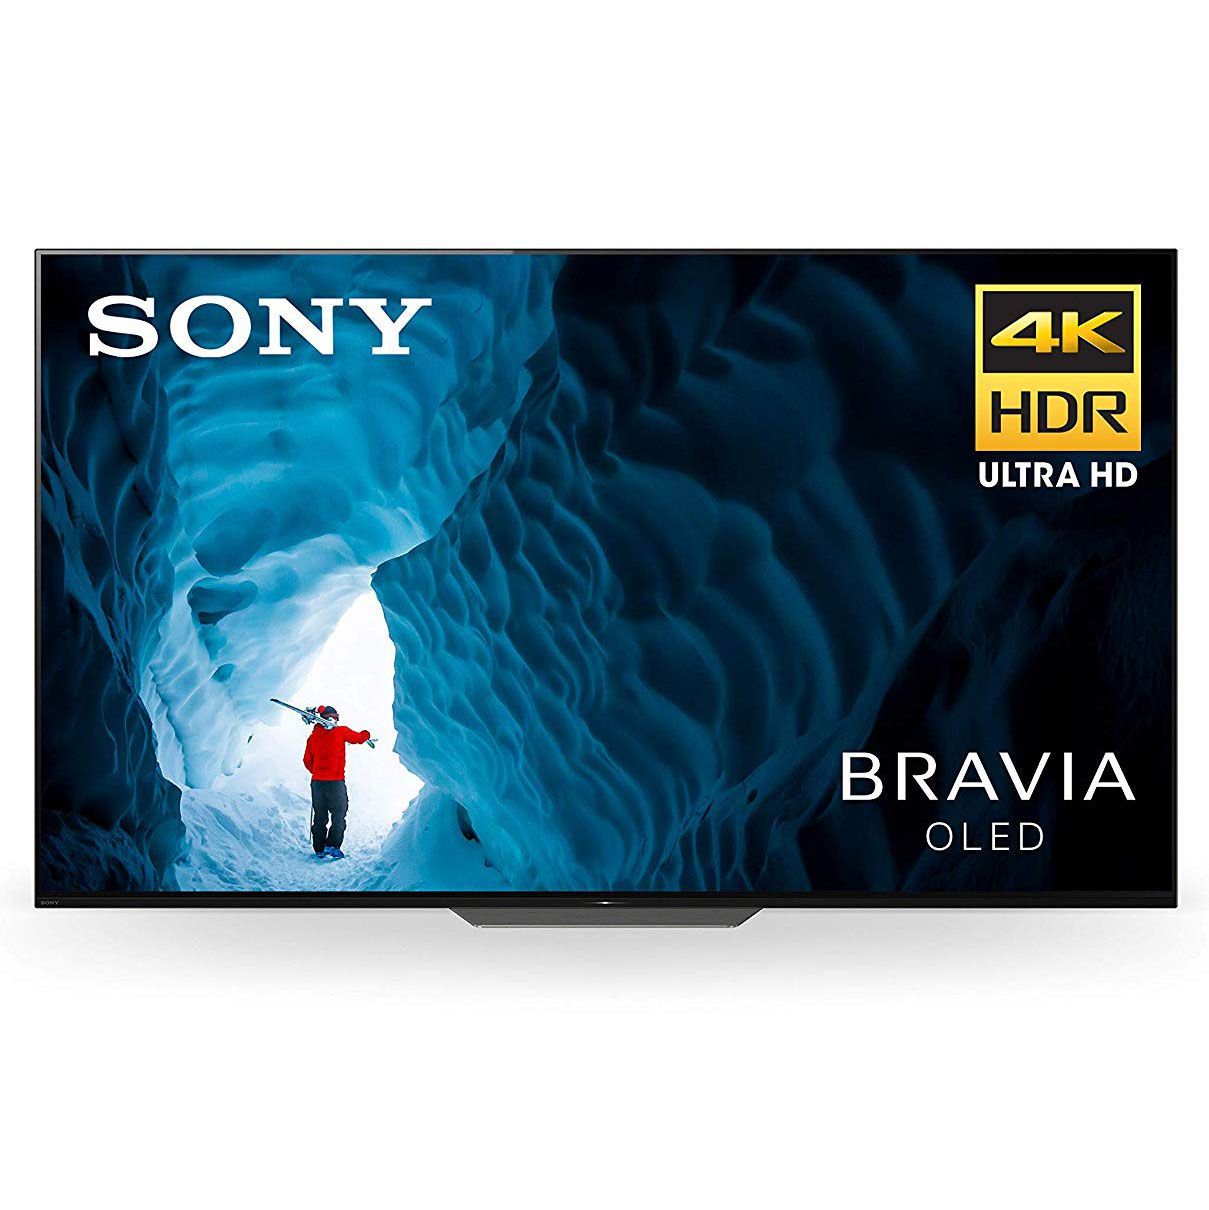 Sony A8F Bravia OLED TV